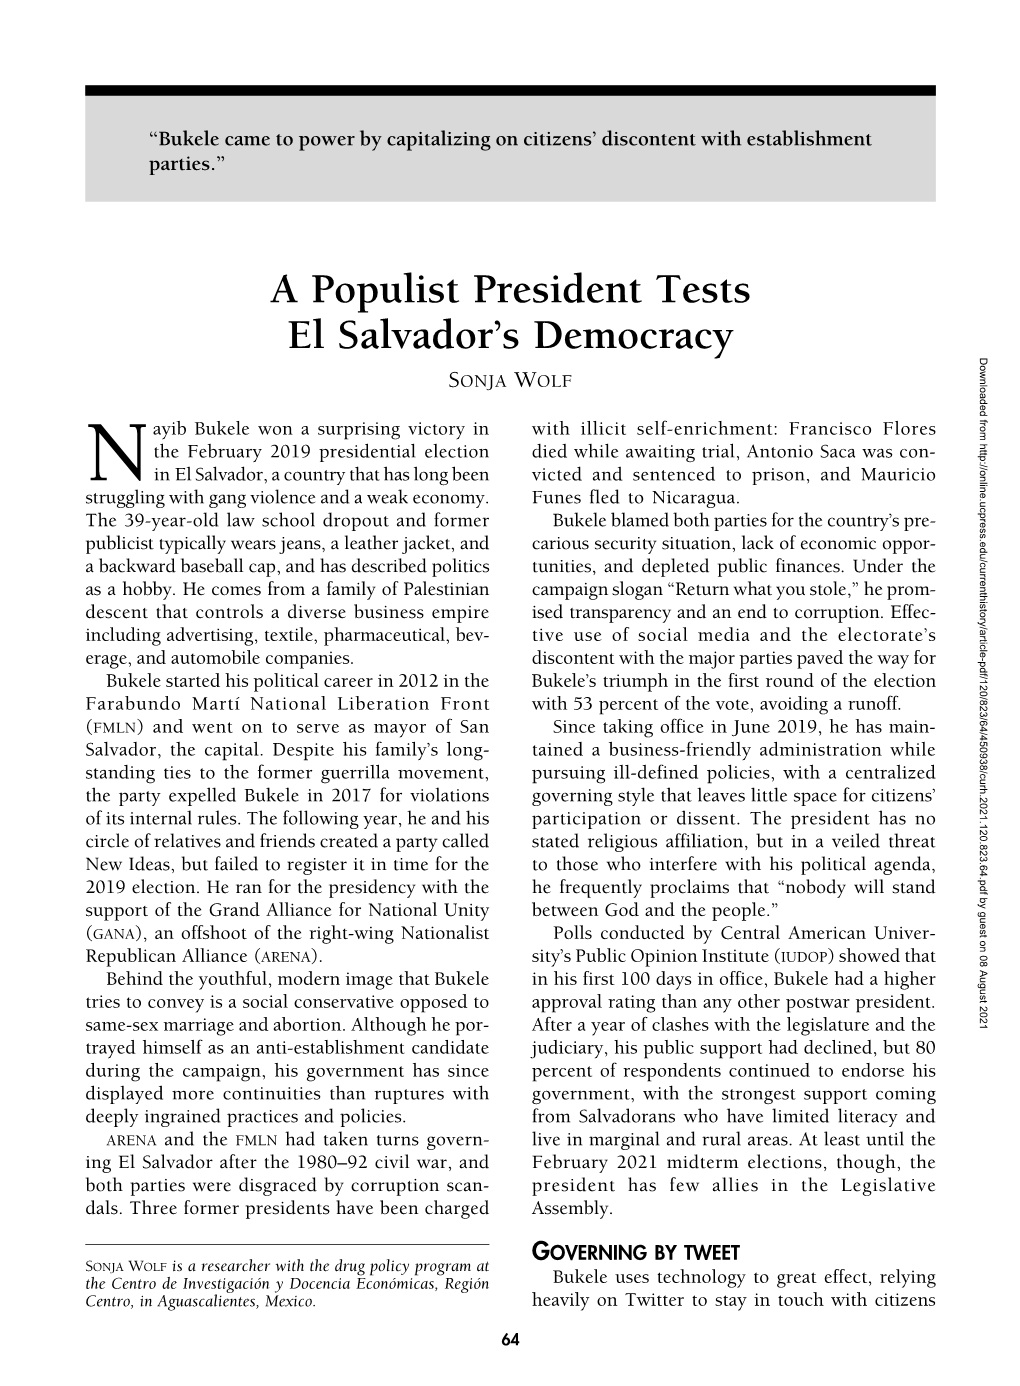 A Populist President Tests El Salvador's Democracy